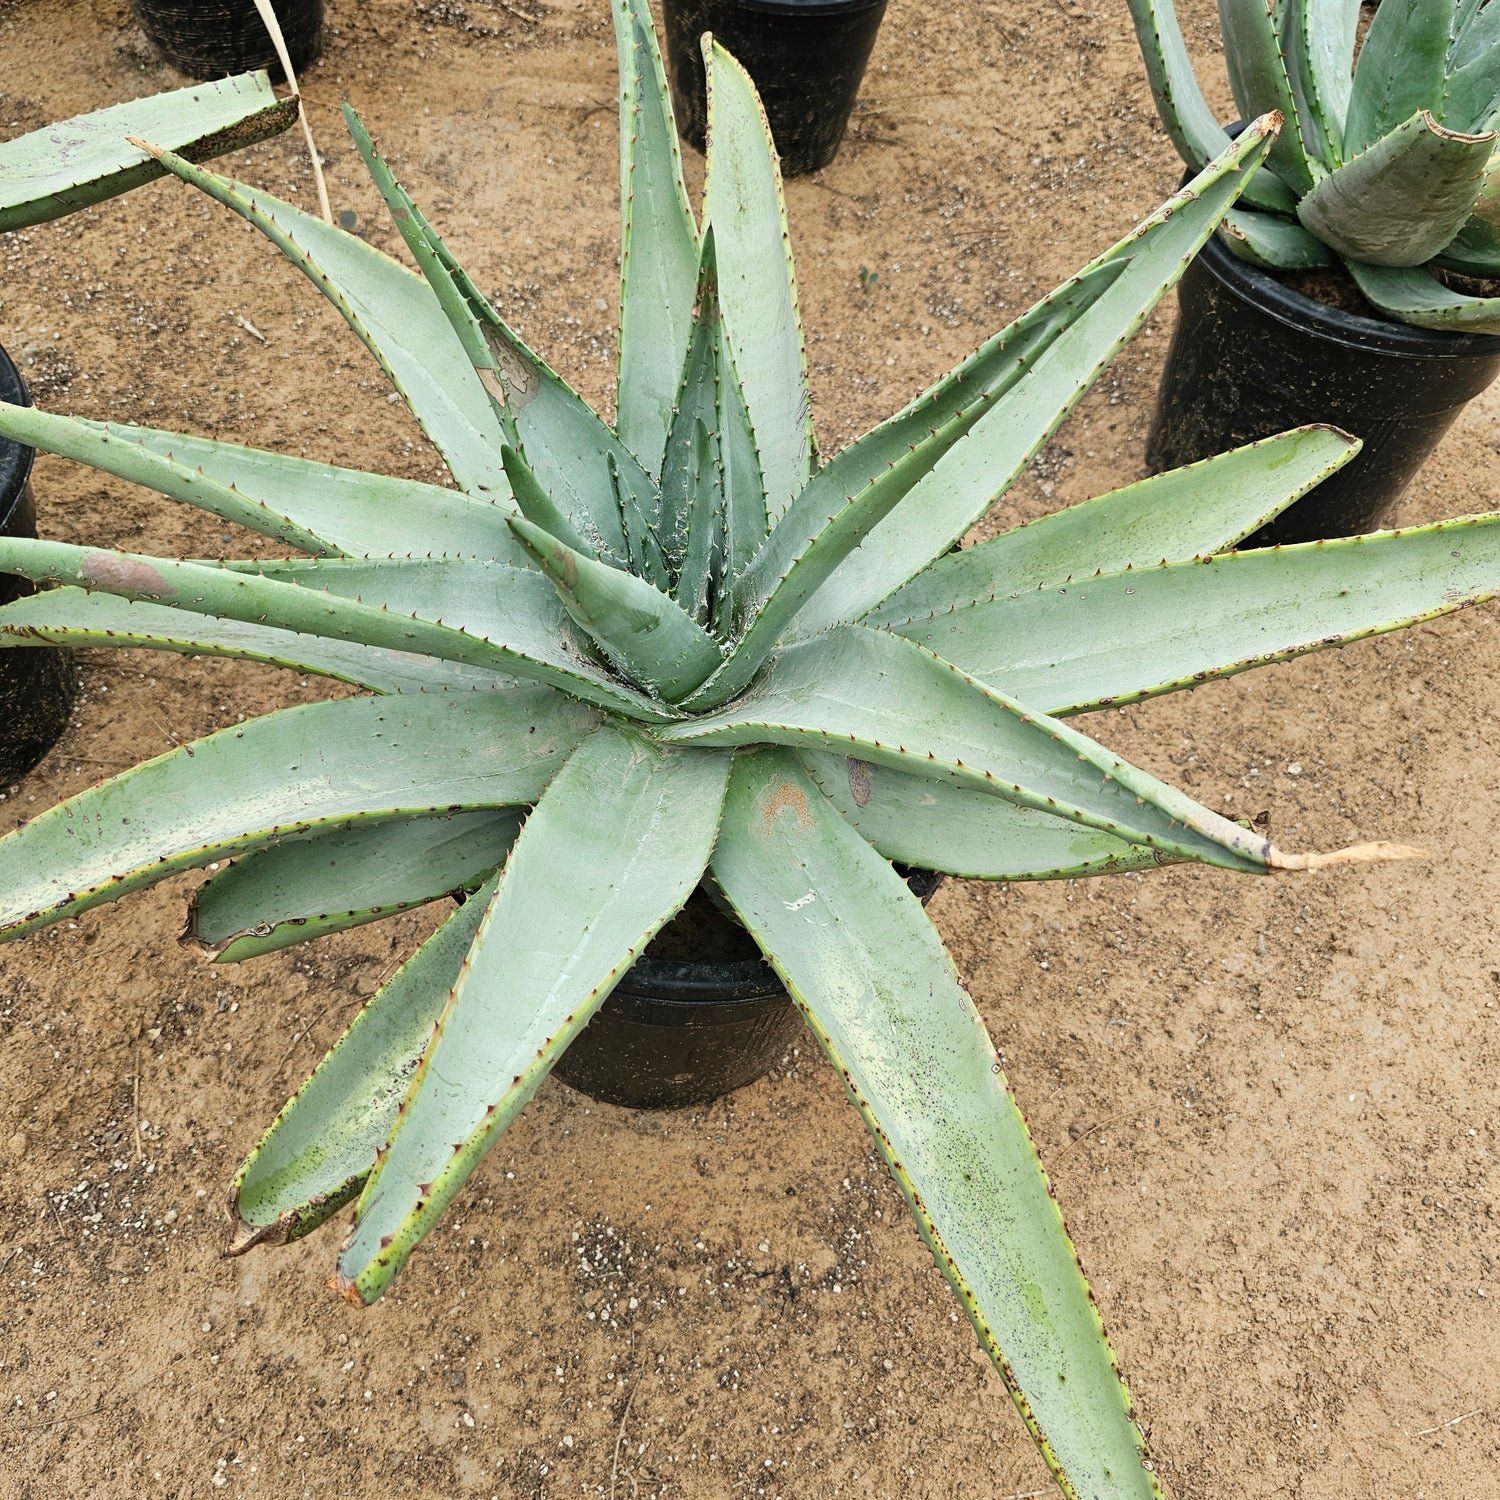 Aloe Ferox / Cape Aloe